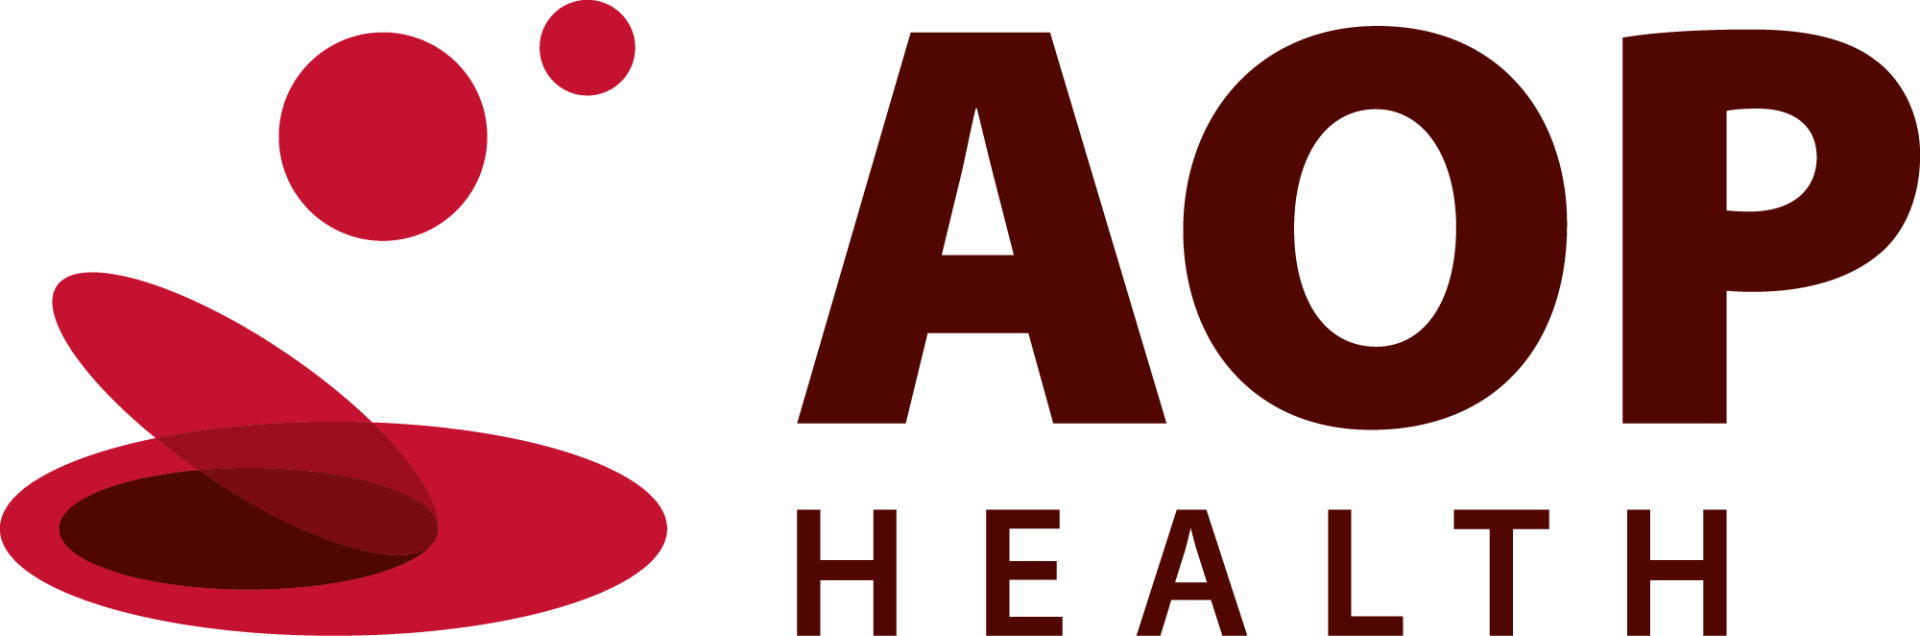 AOP Health Logo